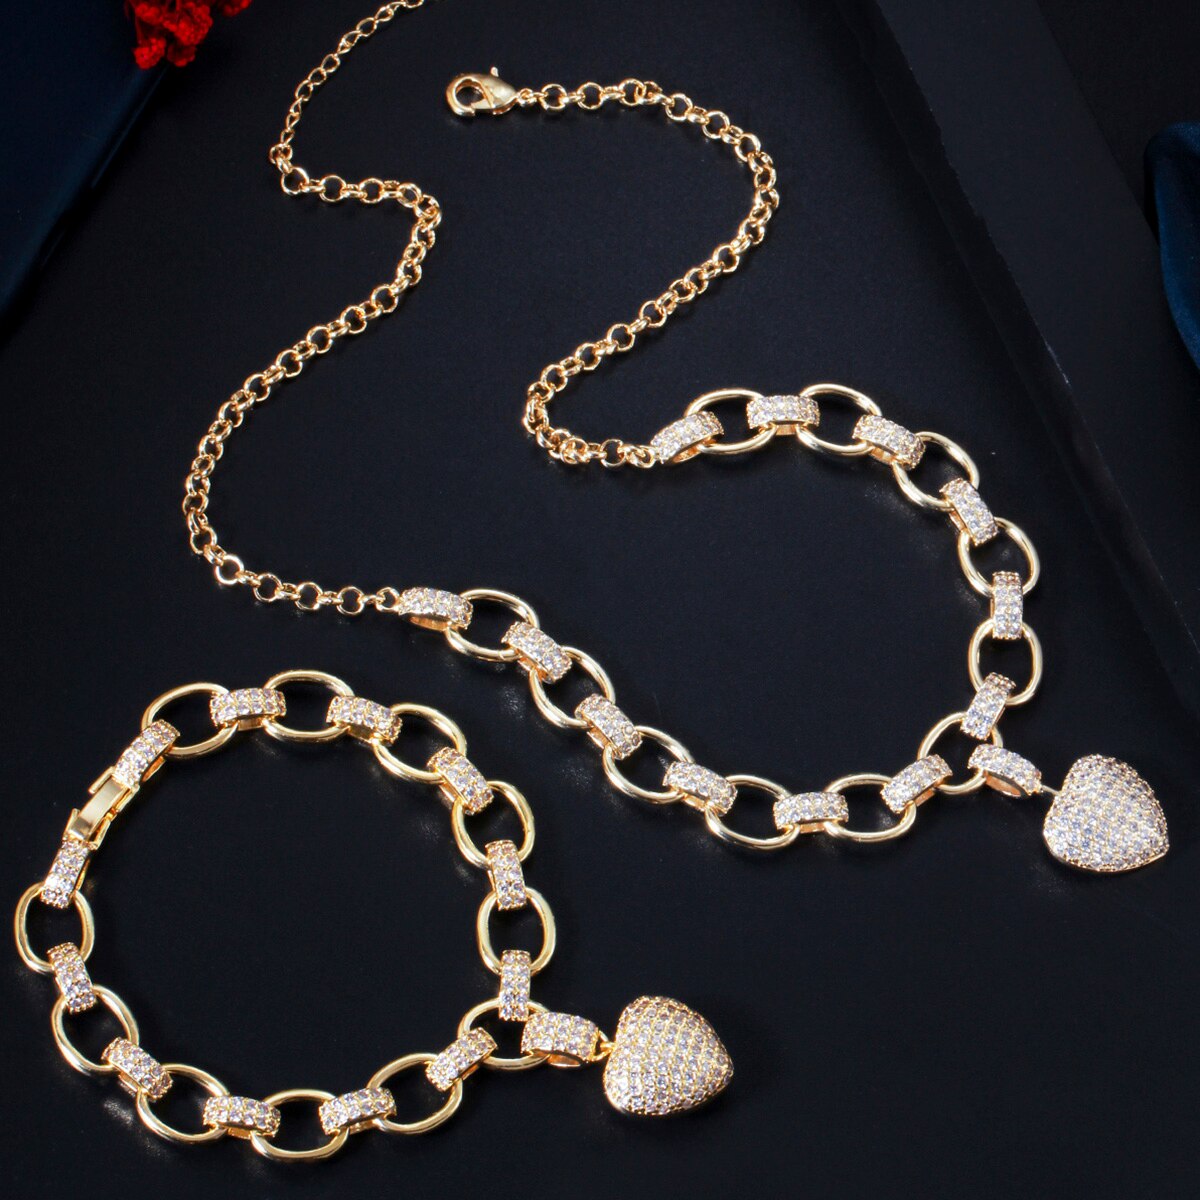 ThreeGraces-Luxury-Cubic-Zirconia-Stone-Yellow-Gold-Color-Love-Heart-Pendant-Necklace-Bracelet-Set-f-1005003297996366-5